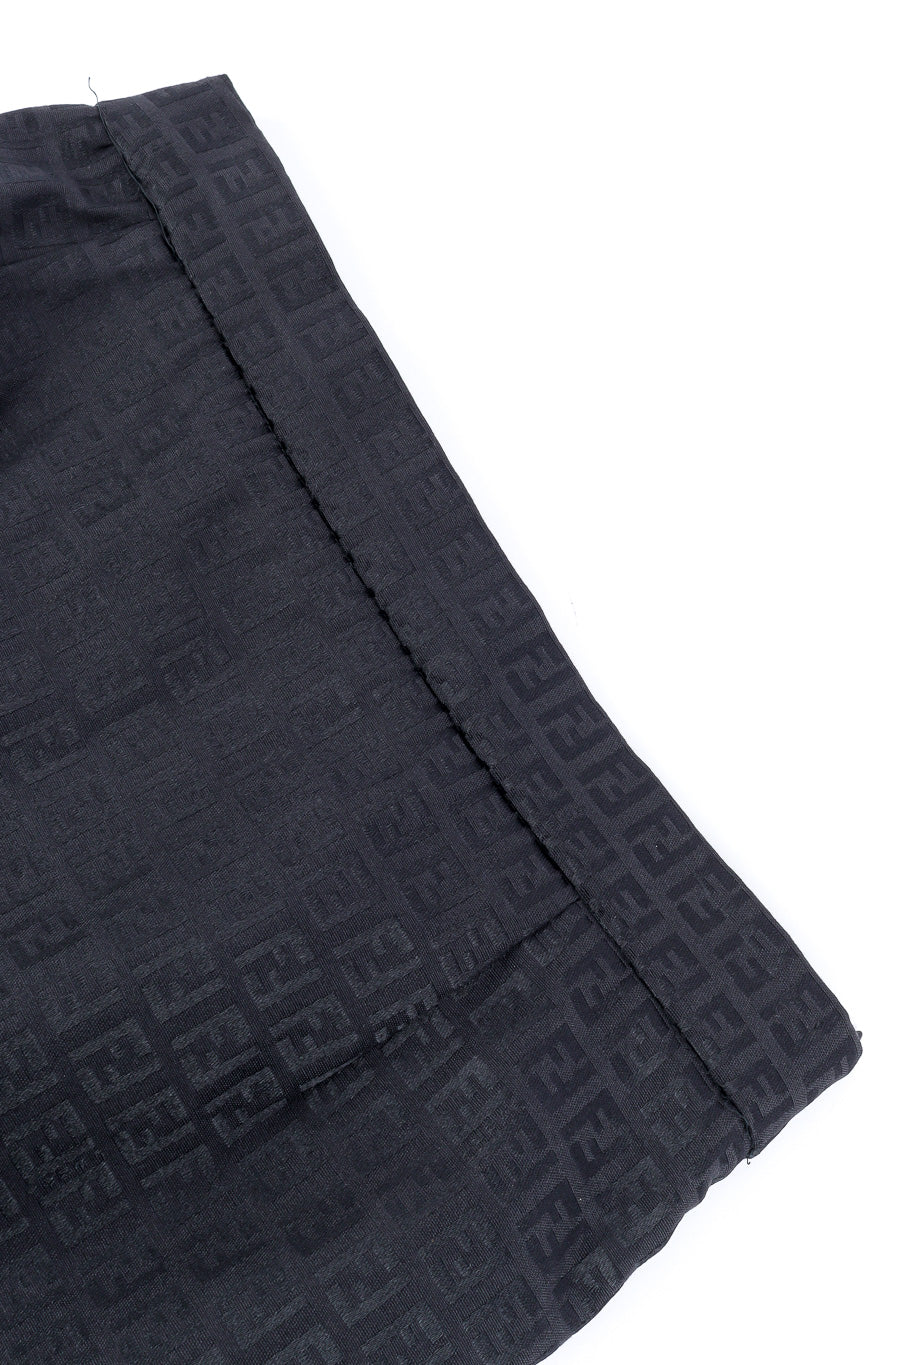 Fendi zucca monogram pencil skirt waistline detail @recessla